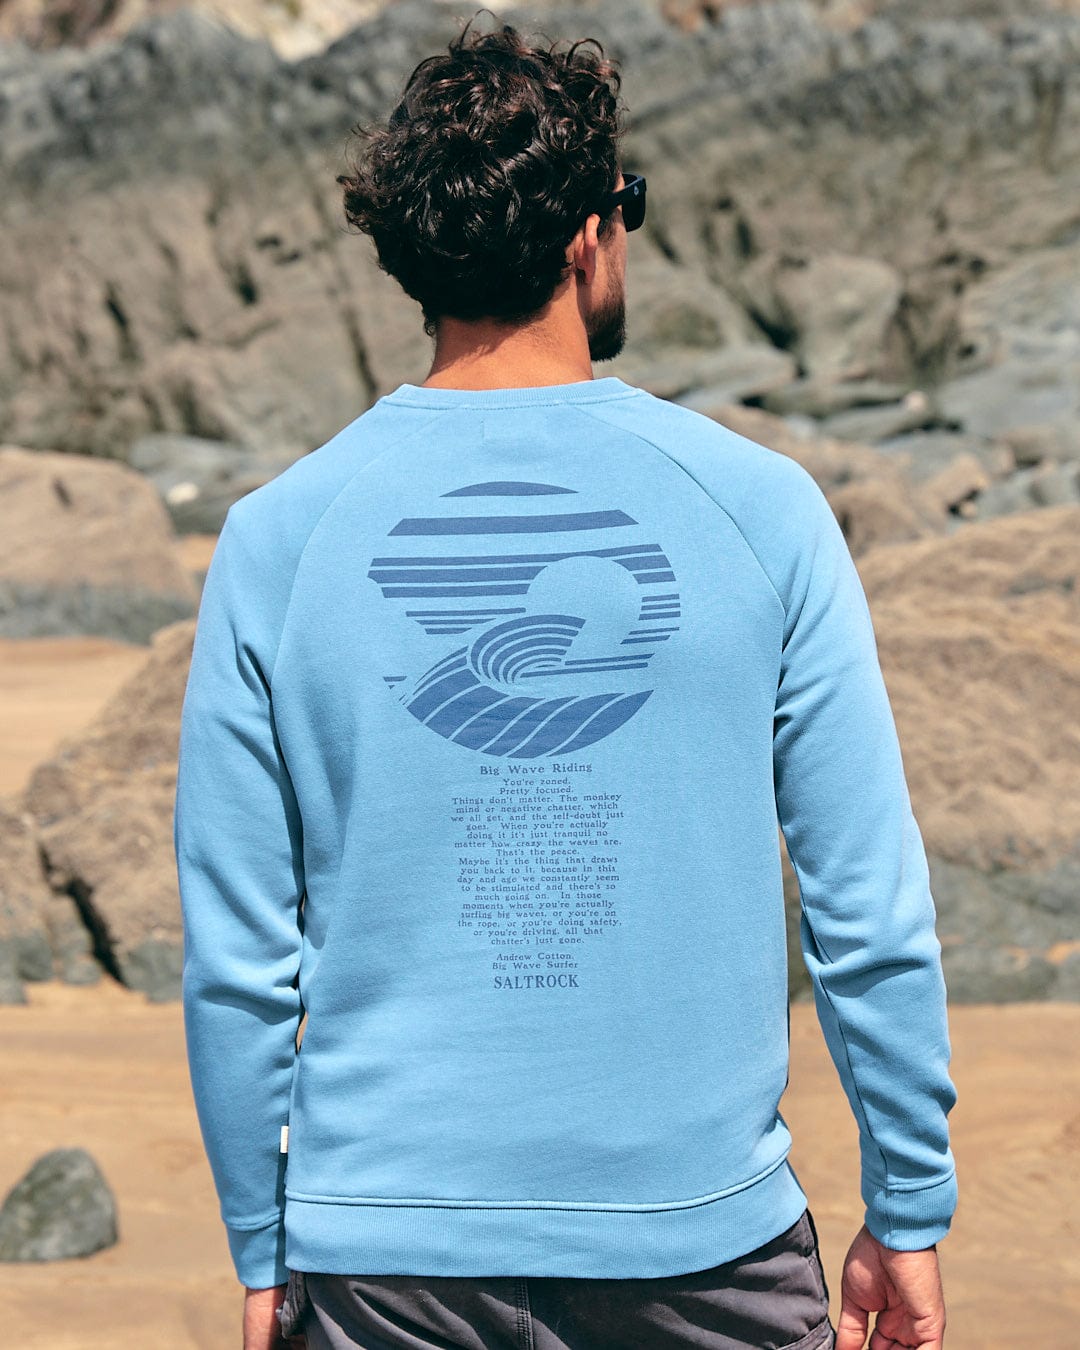 The back of a man wearing a Saltrock Atlantic - Mens Crew Sweat - Light Blue on the beach.